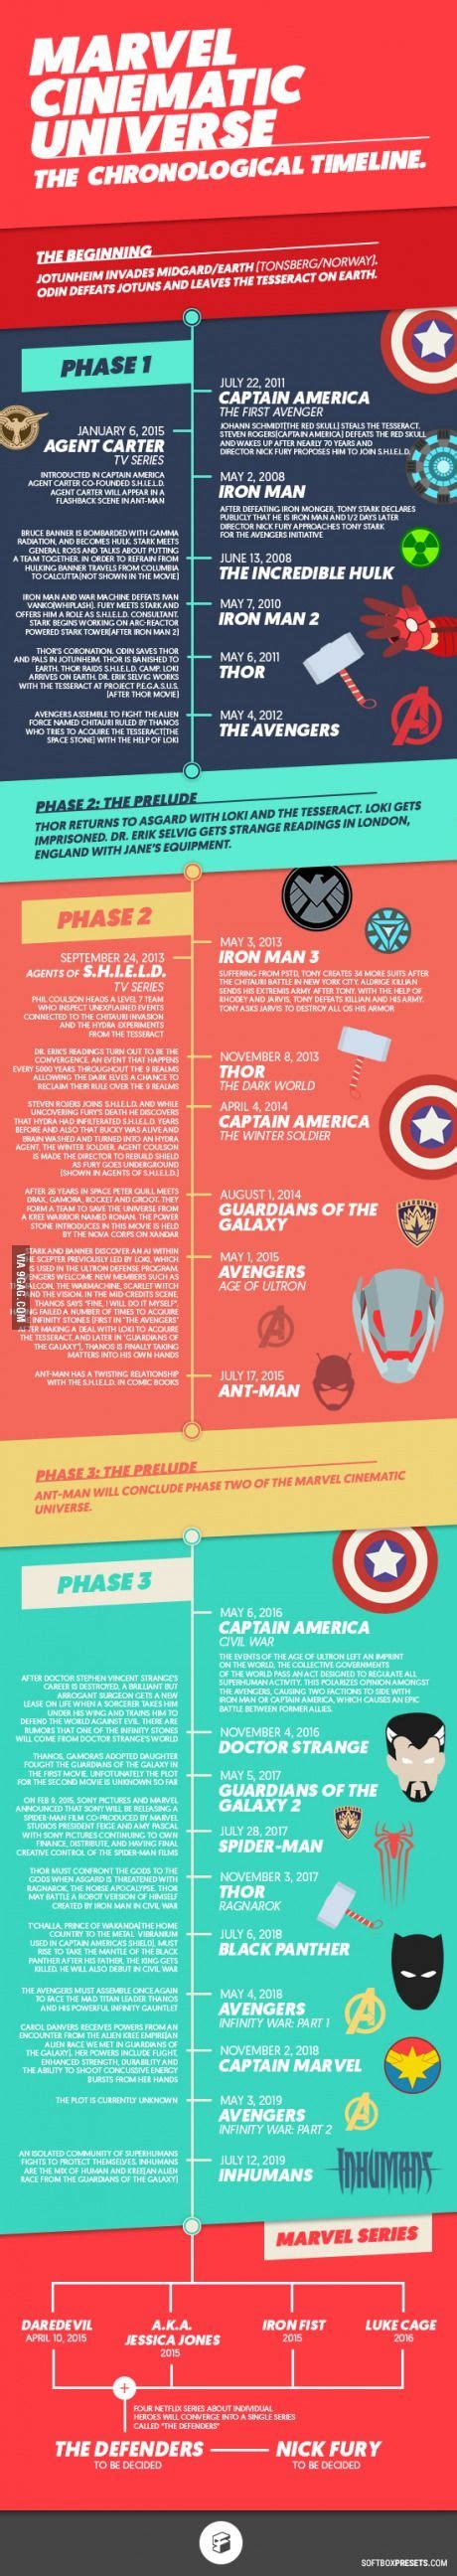 Marvel Cinematic Universe - The Chronological Timeline ...